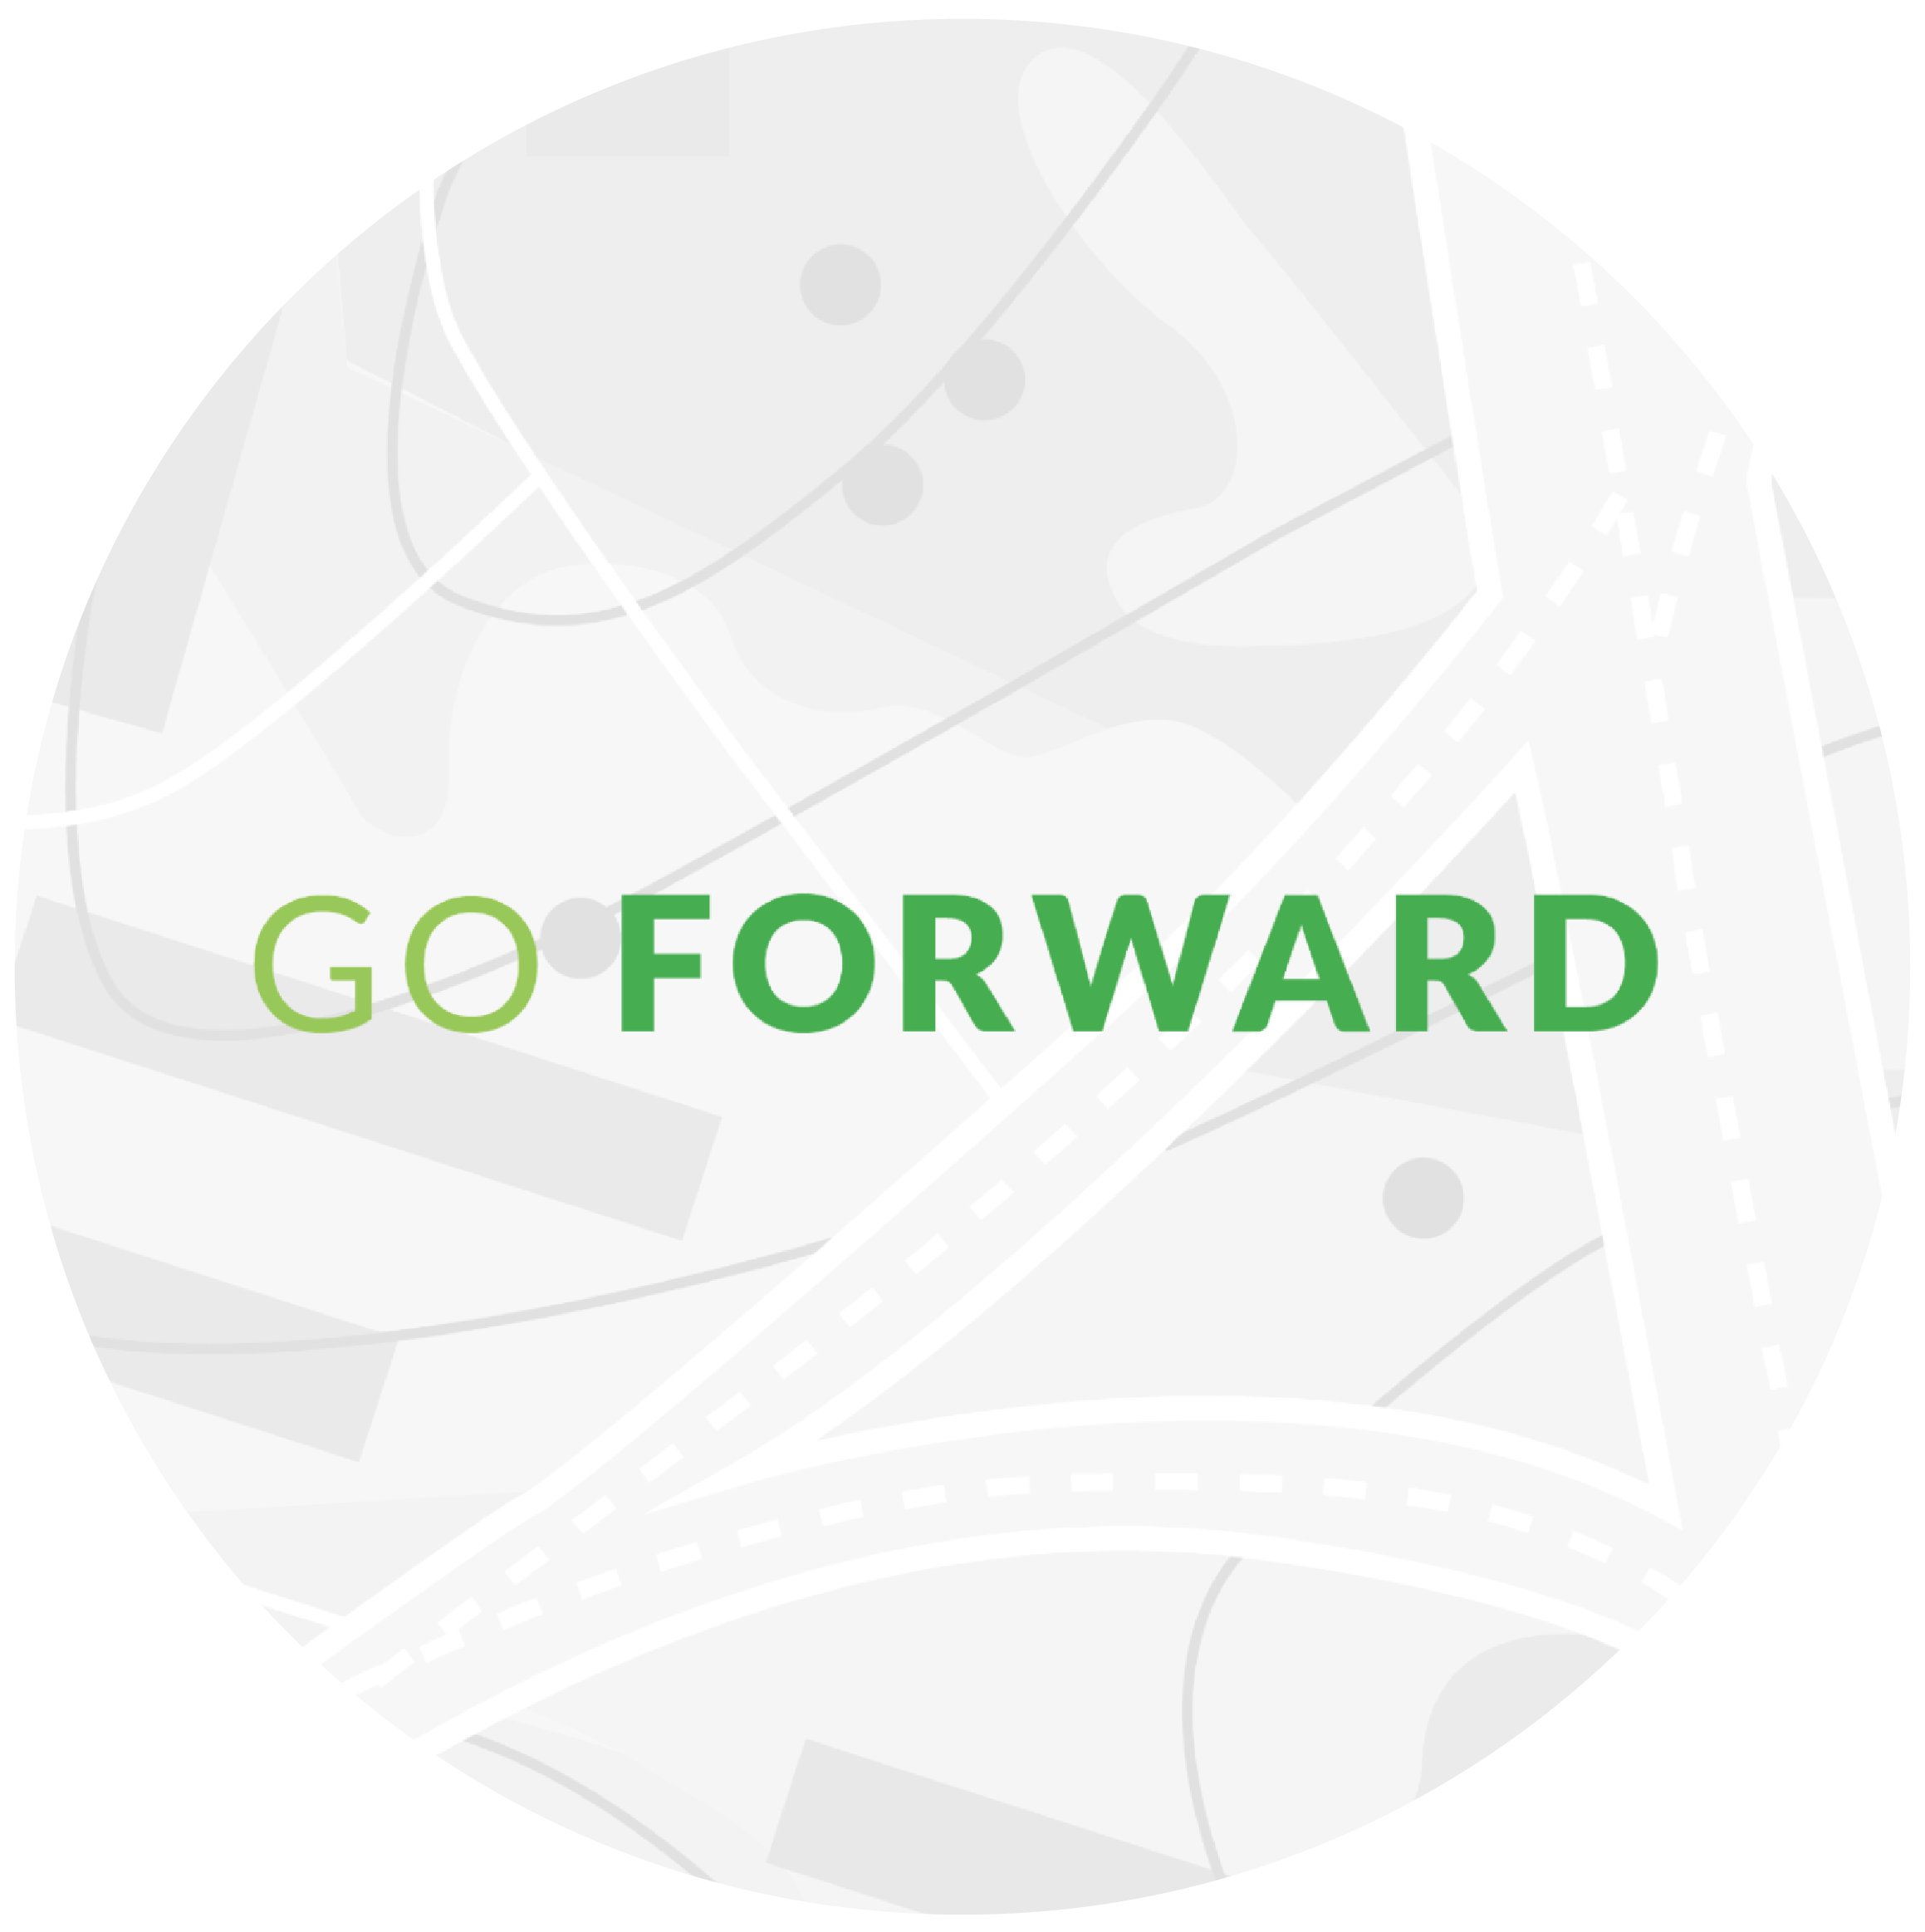 GoForward Campaign